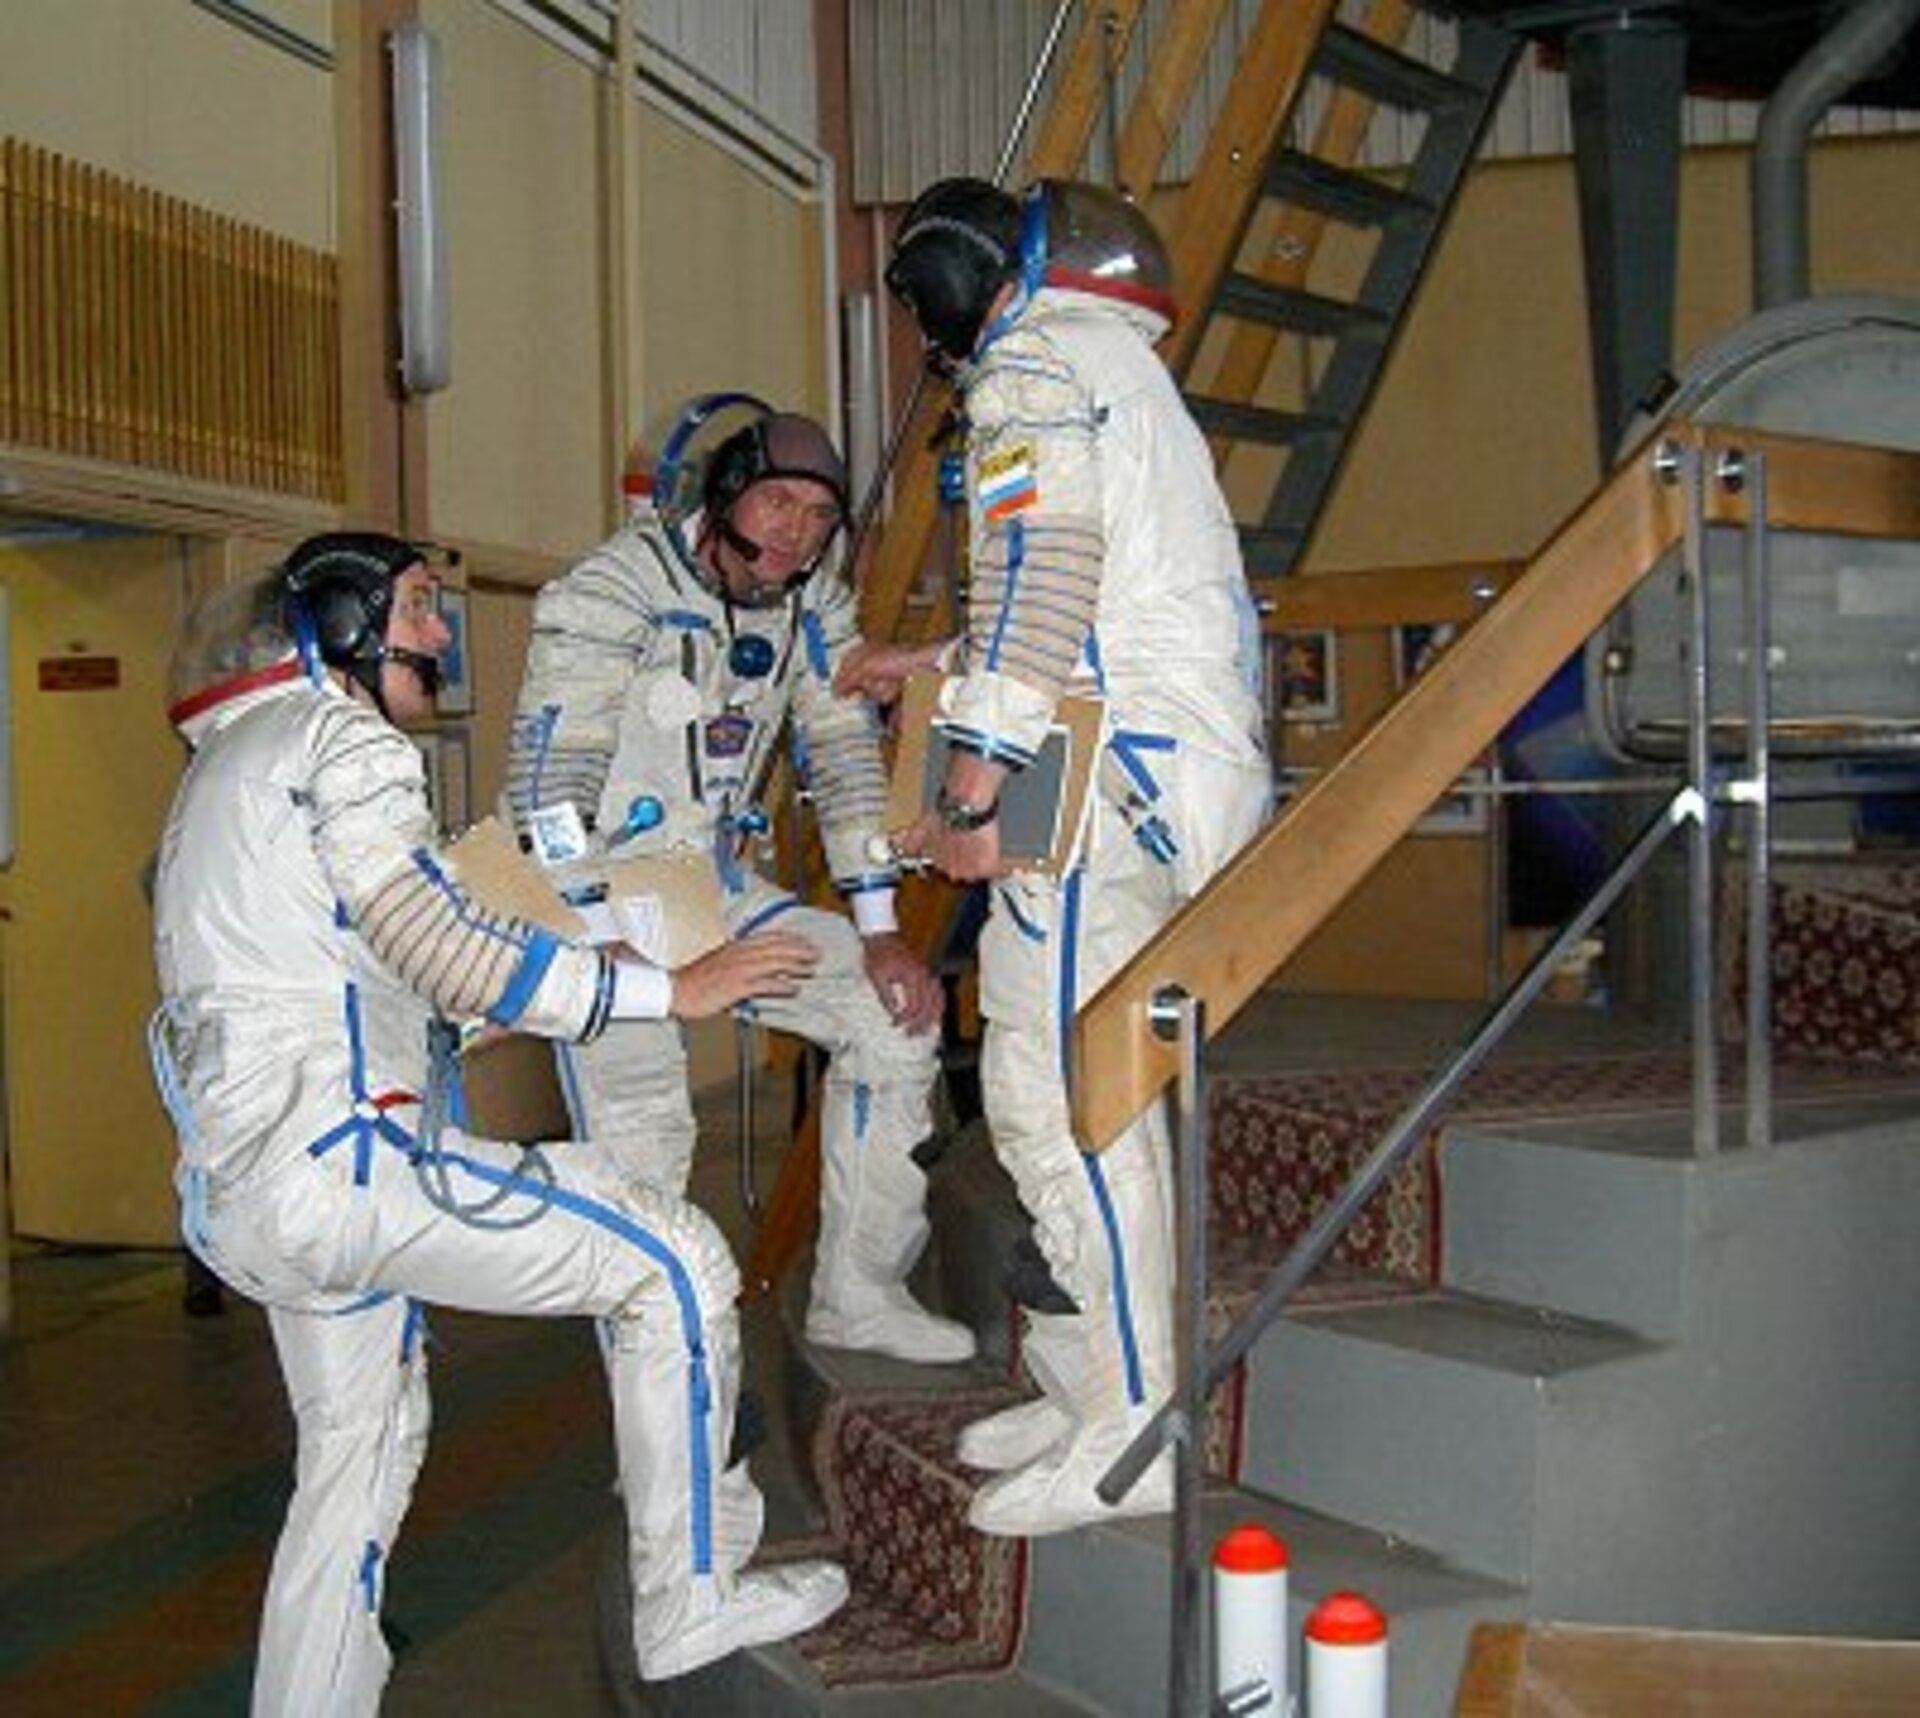 Soyuz TMA-4 crew prepare for Soyuz simulator training at Star City